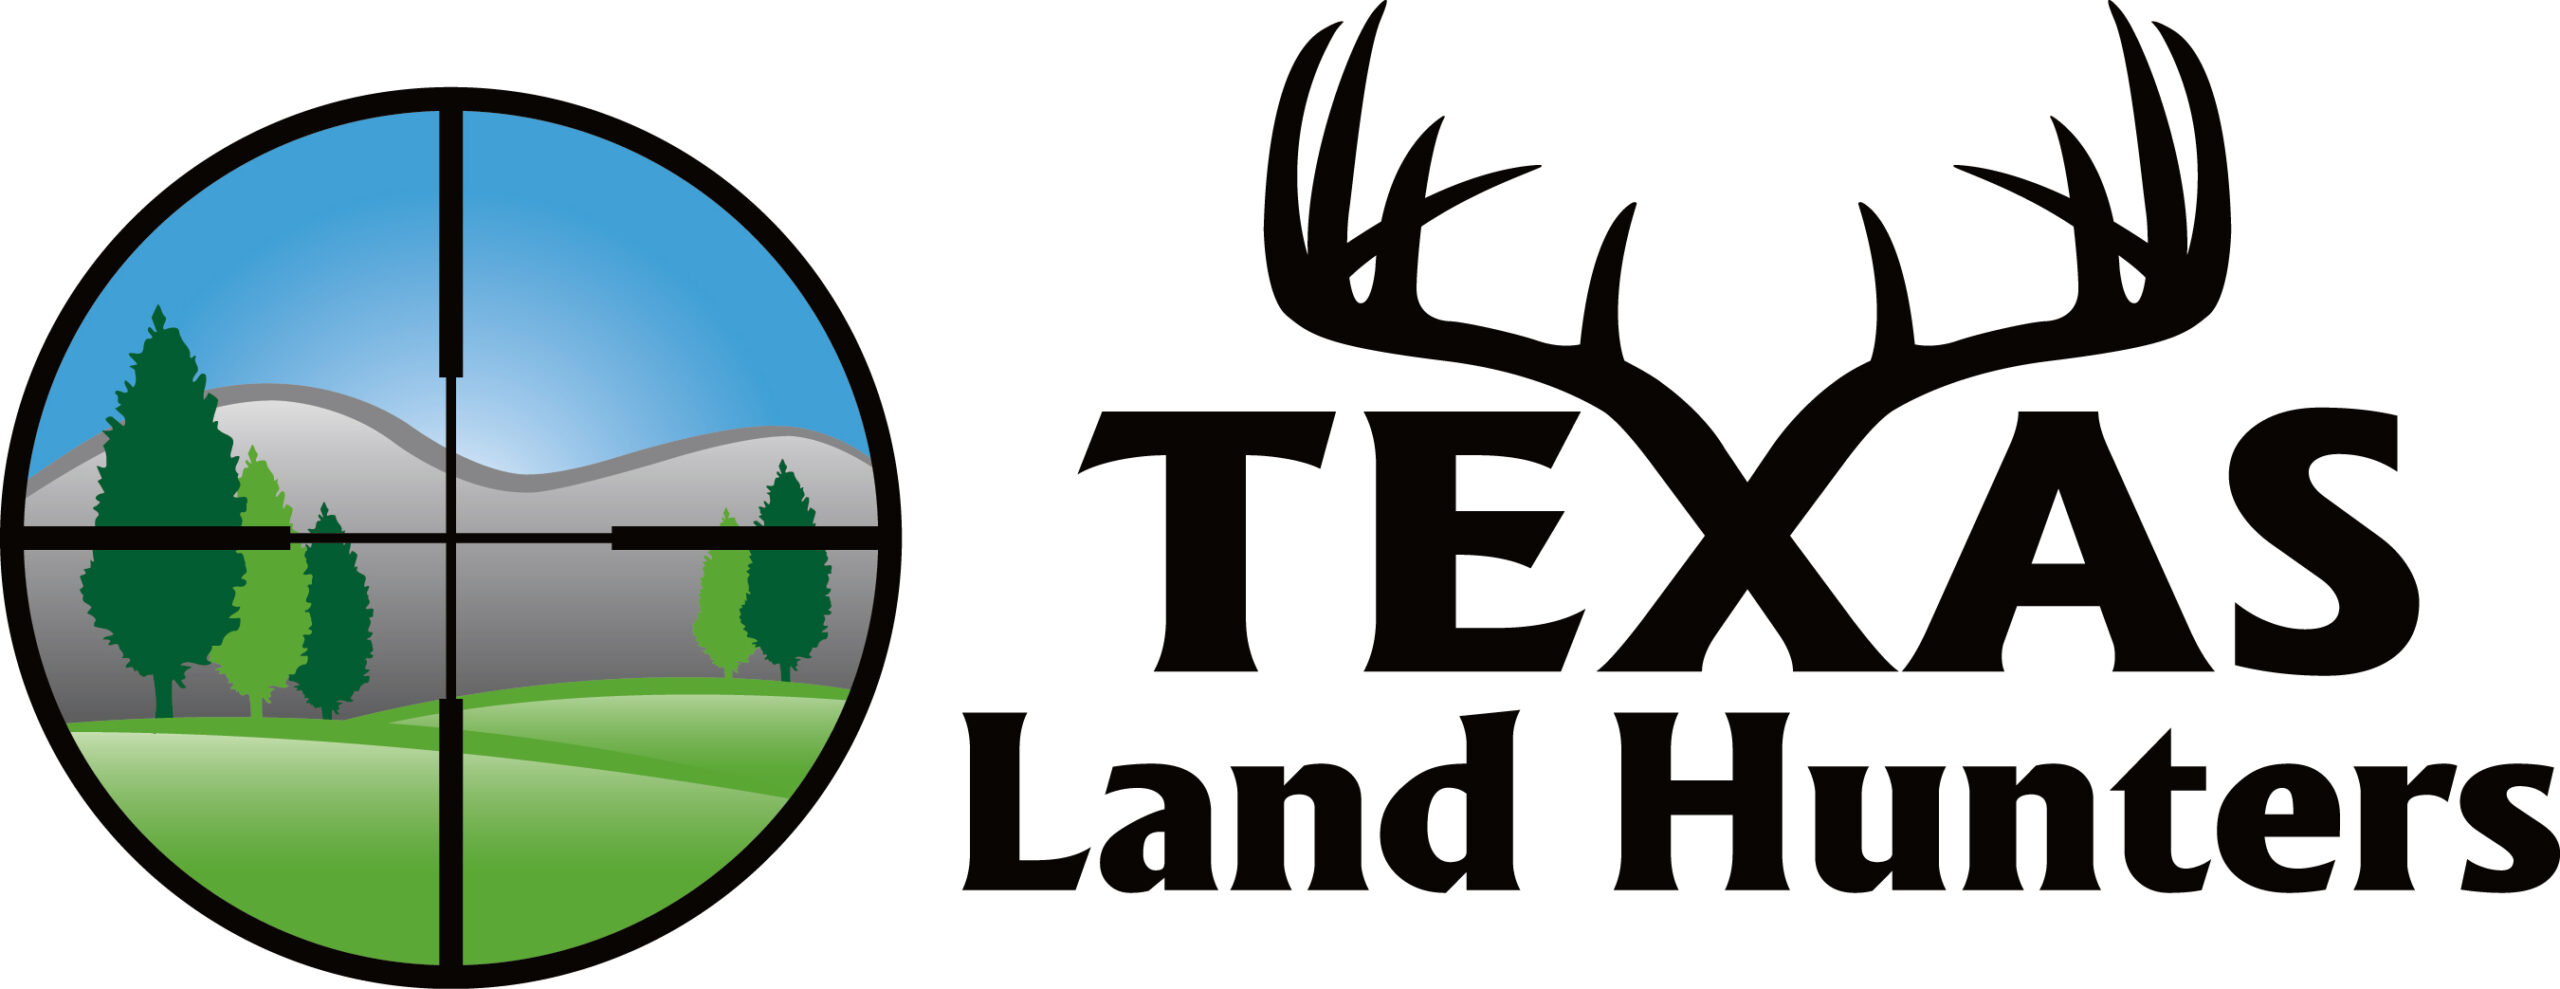 Texas Land Hunters